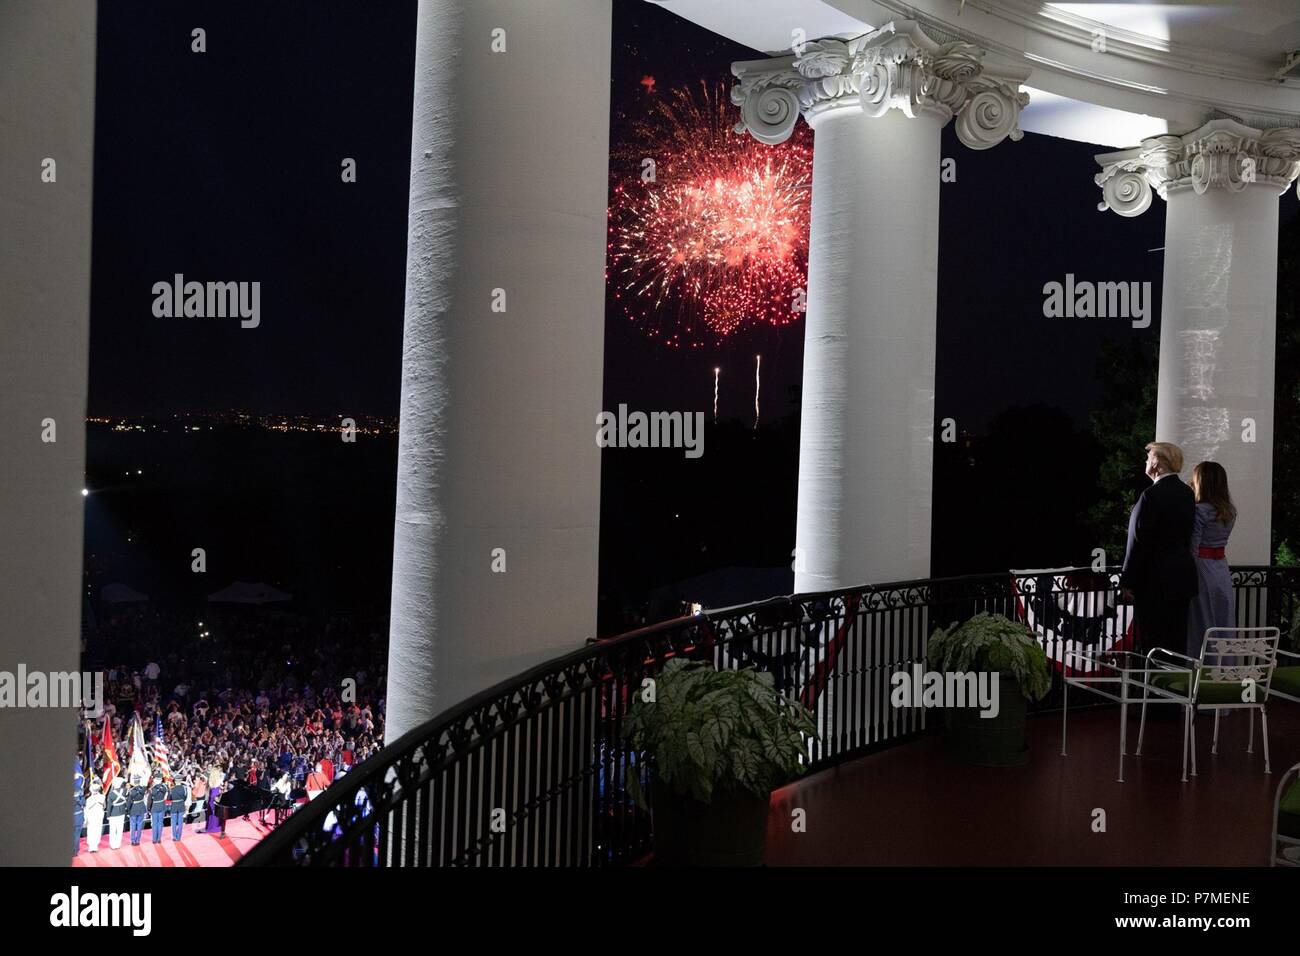 Stunning Donald Trump Melania PHOTO July 4 Fireworks White House Balcony 5x7